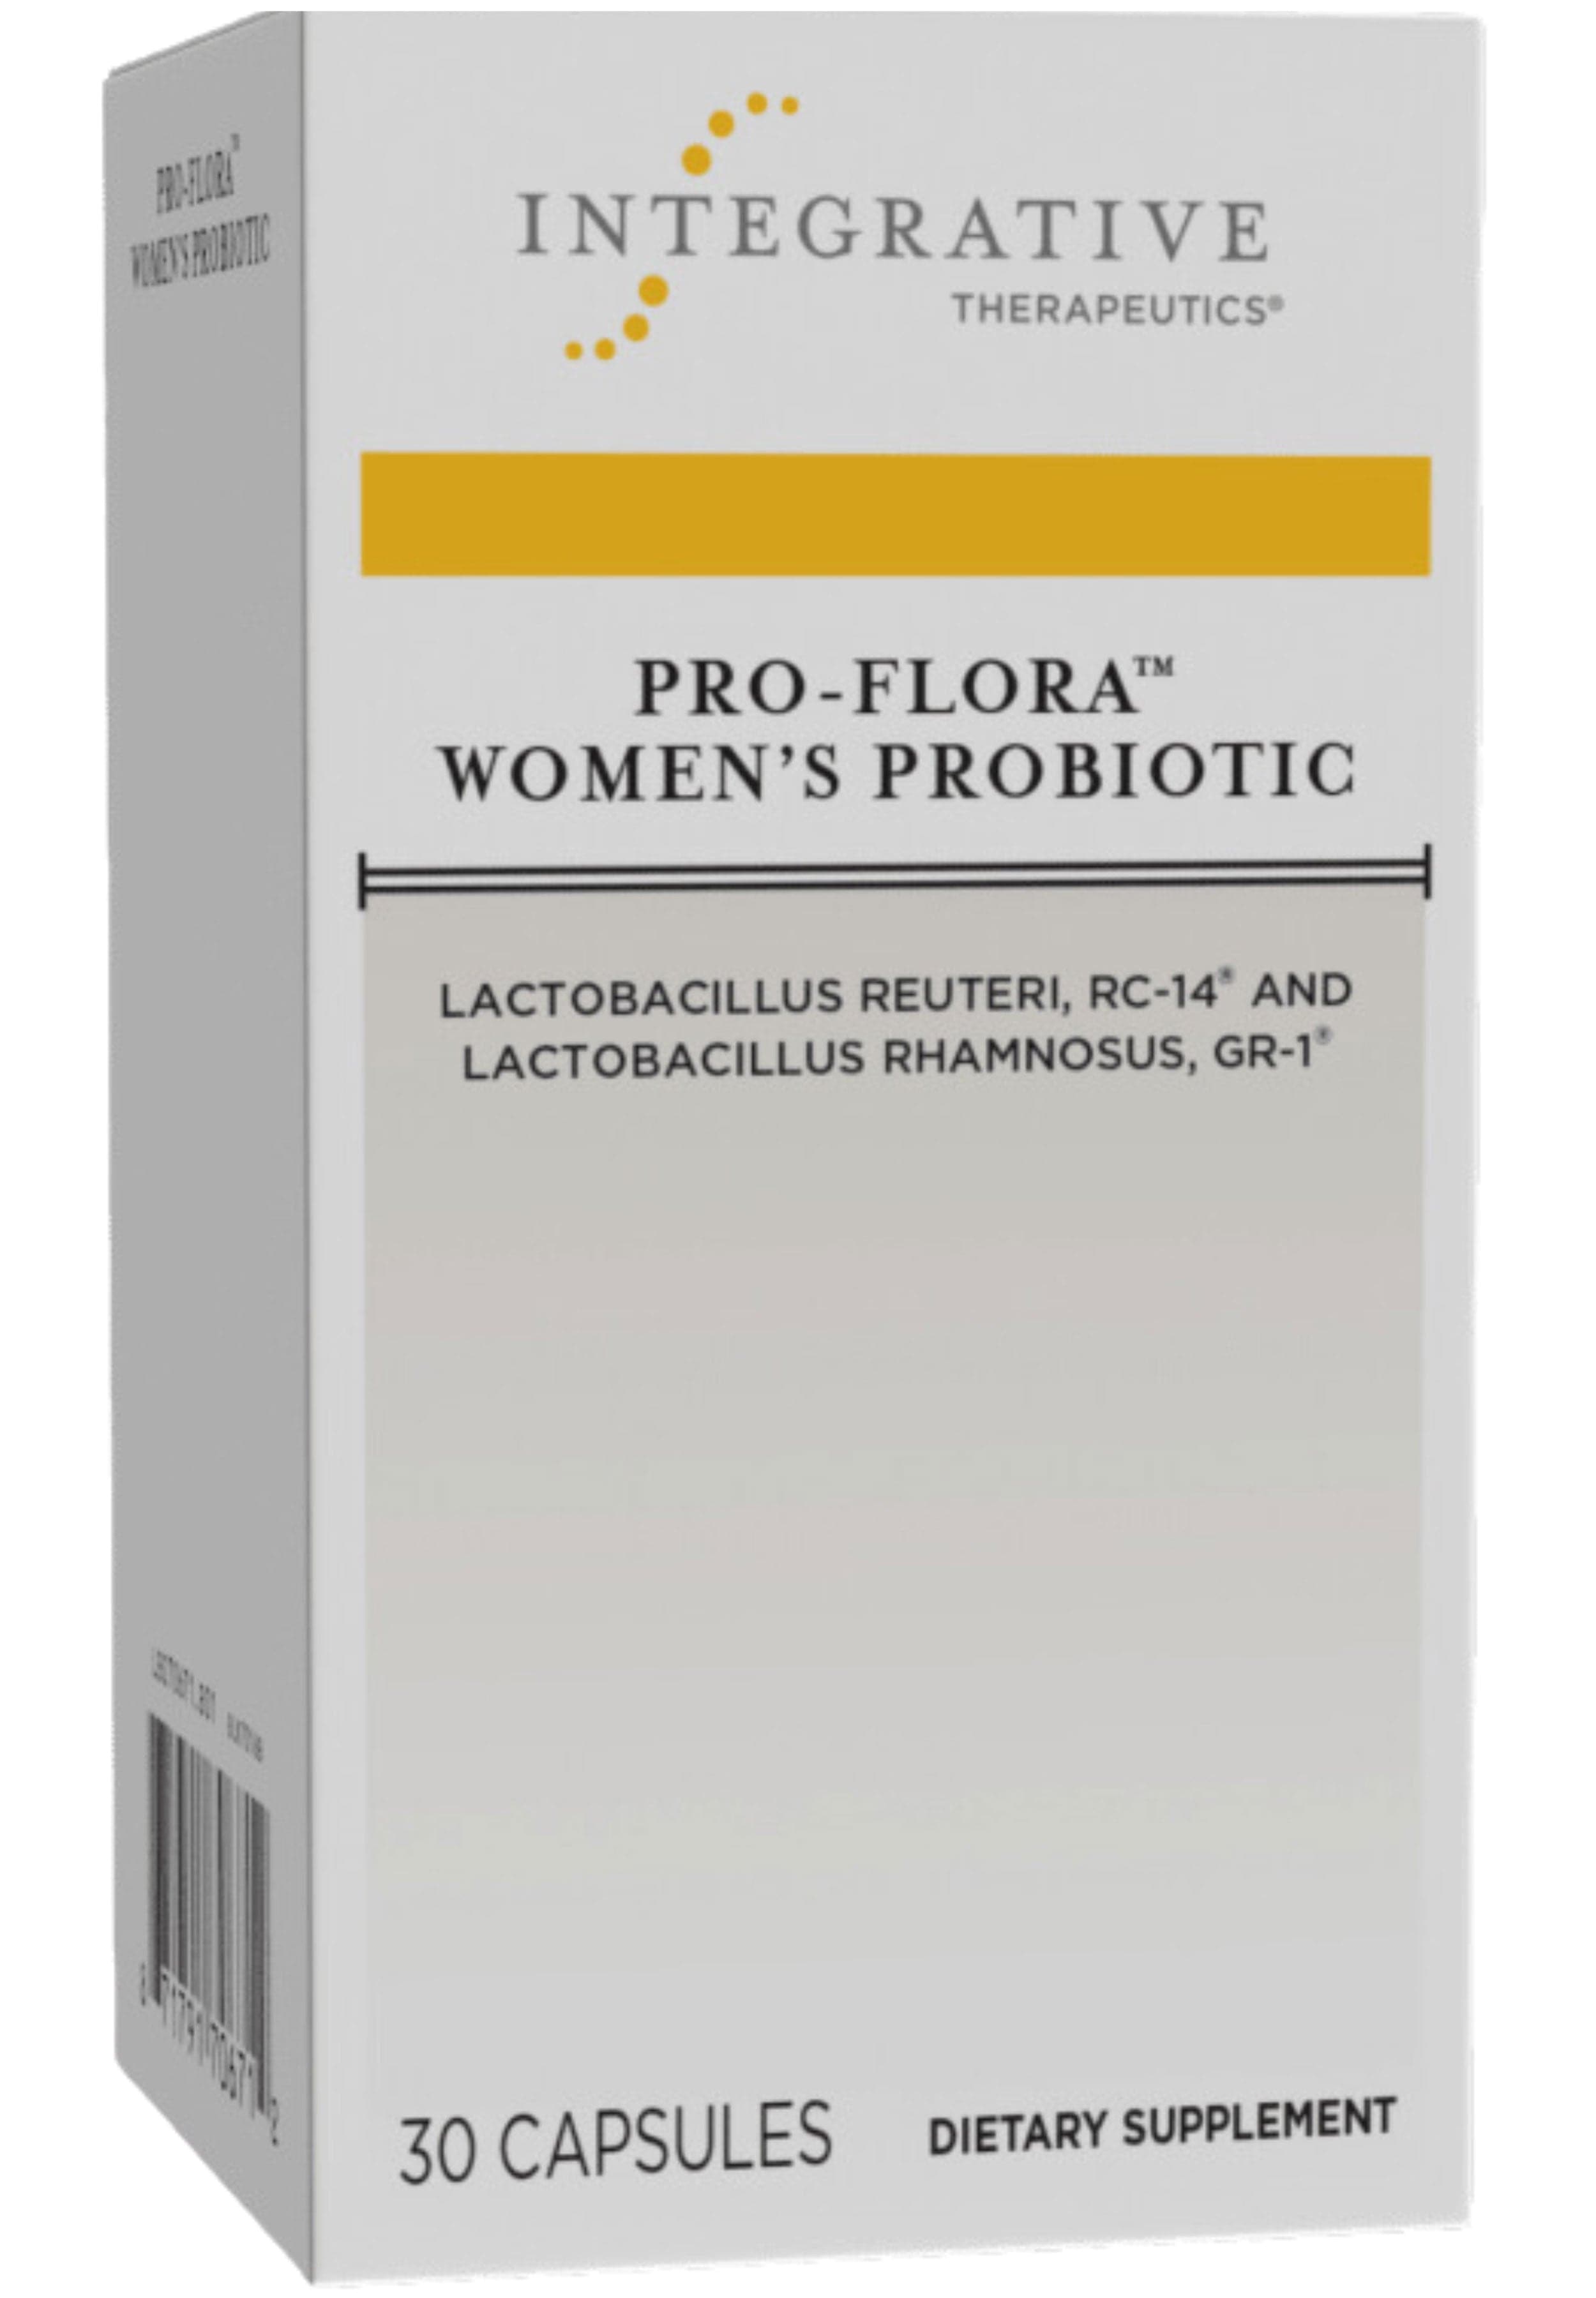 Integrative Therapeutics Pro-Flora Women's Probiotic